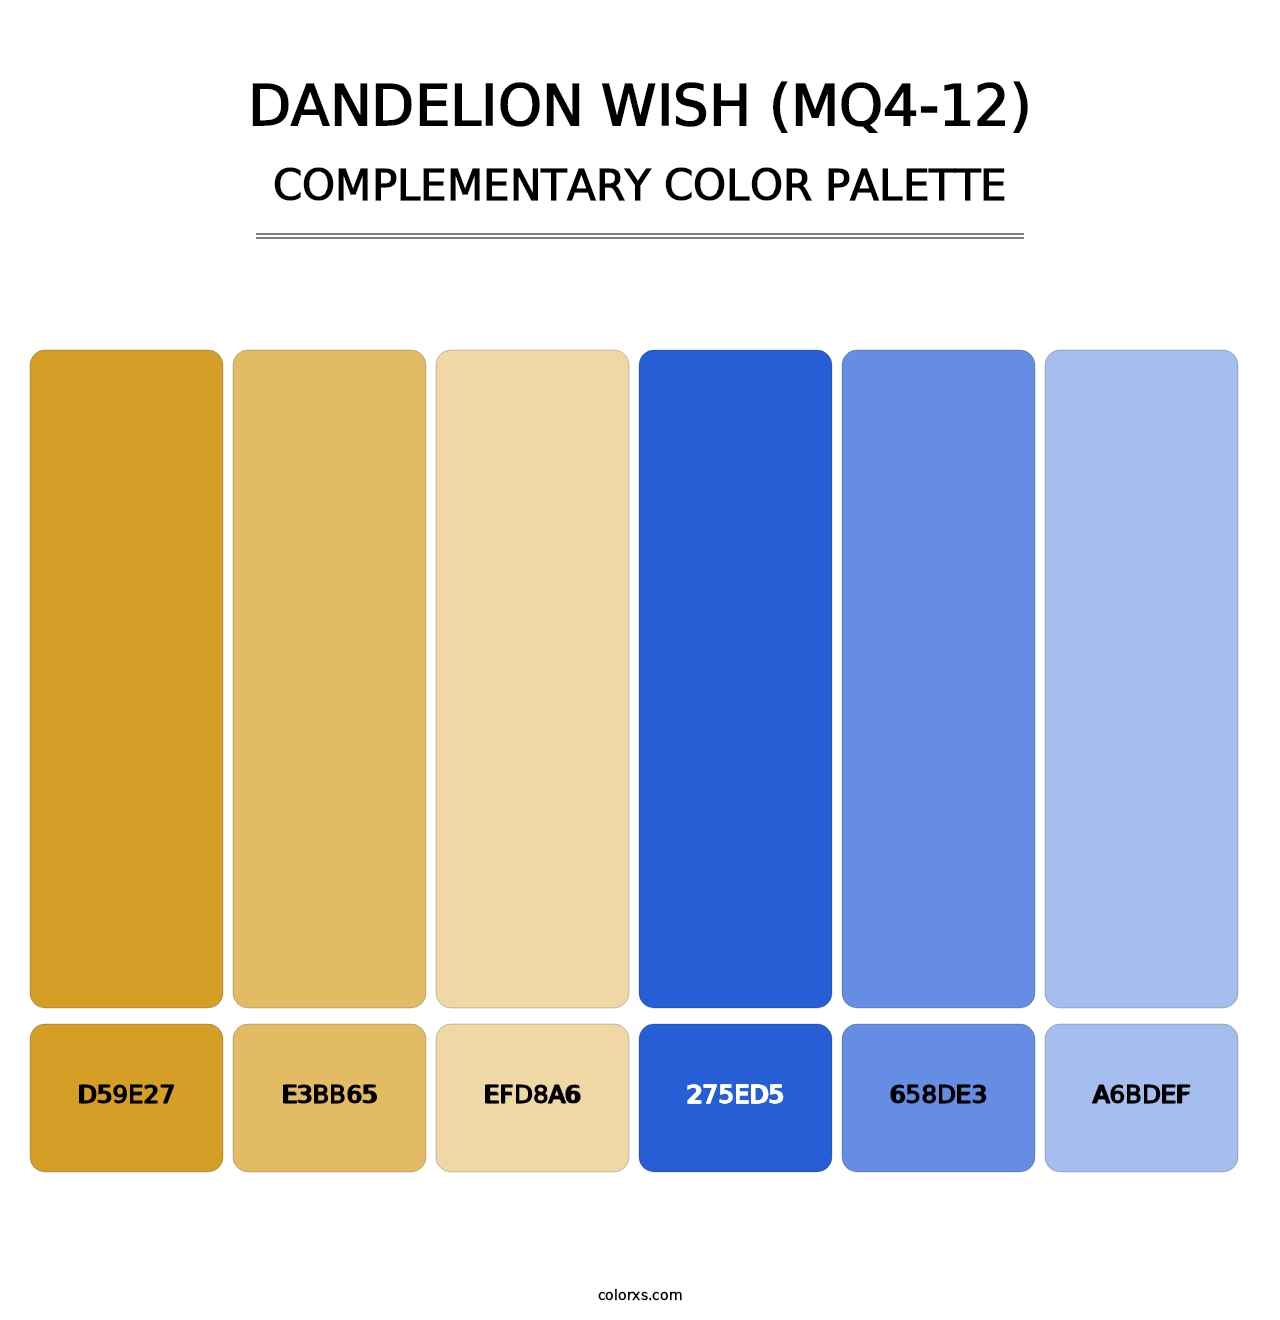 Dandelion Wish (MQ4-12) - Complementary Color Palette